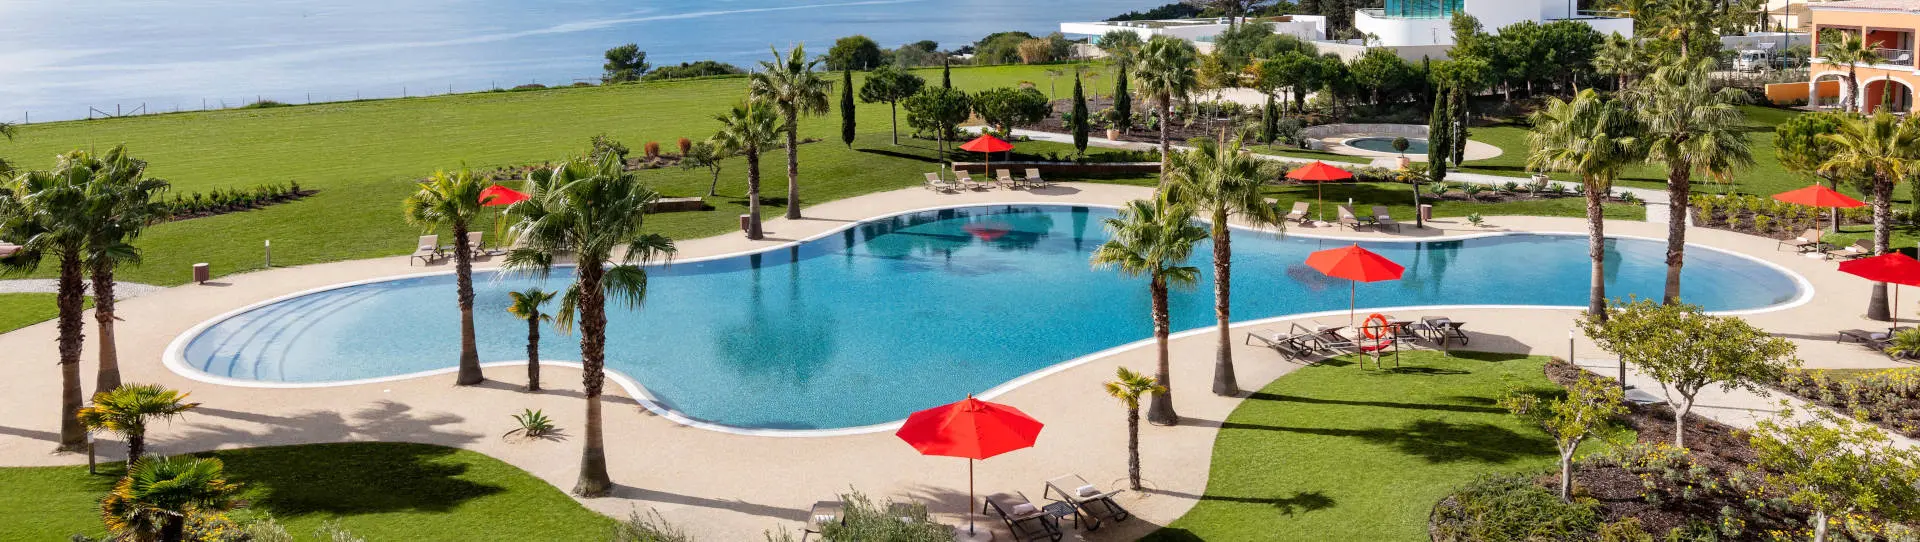 Portugal golf holidays - Cascade Wellness & Lifestyle Resort - Photo 1